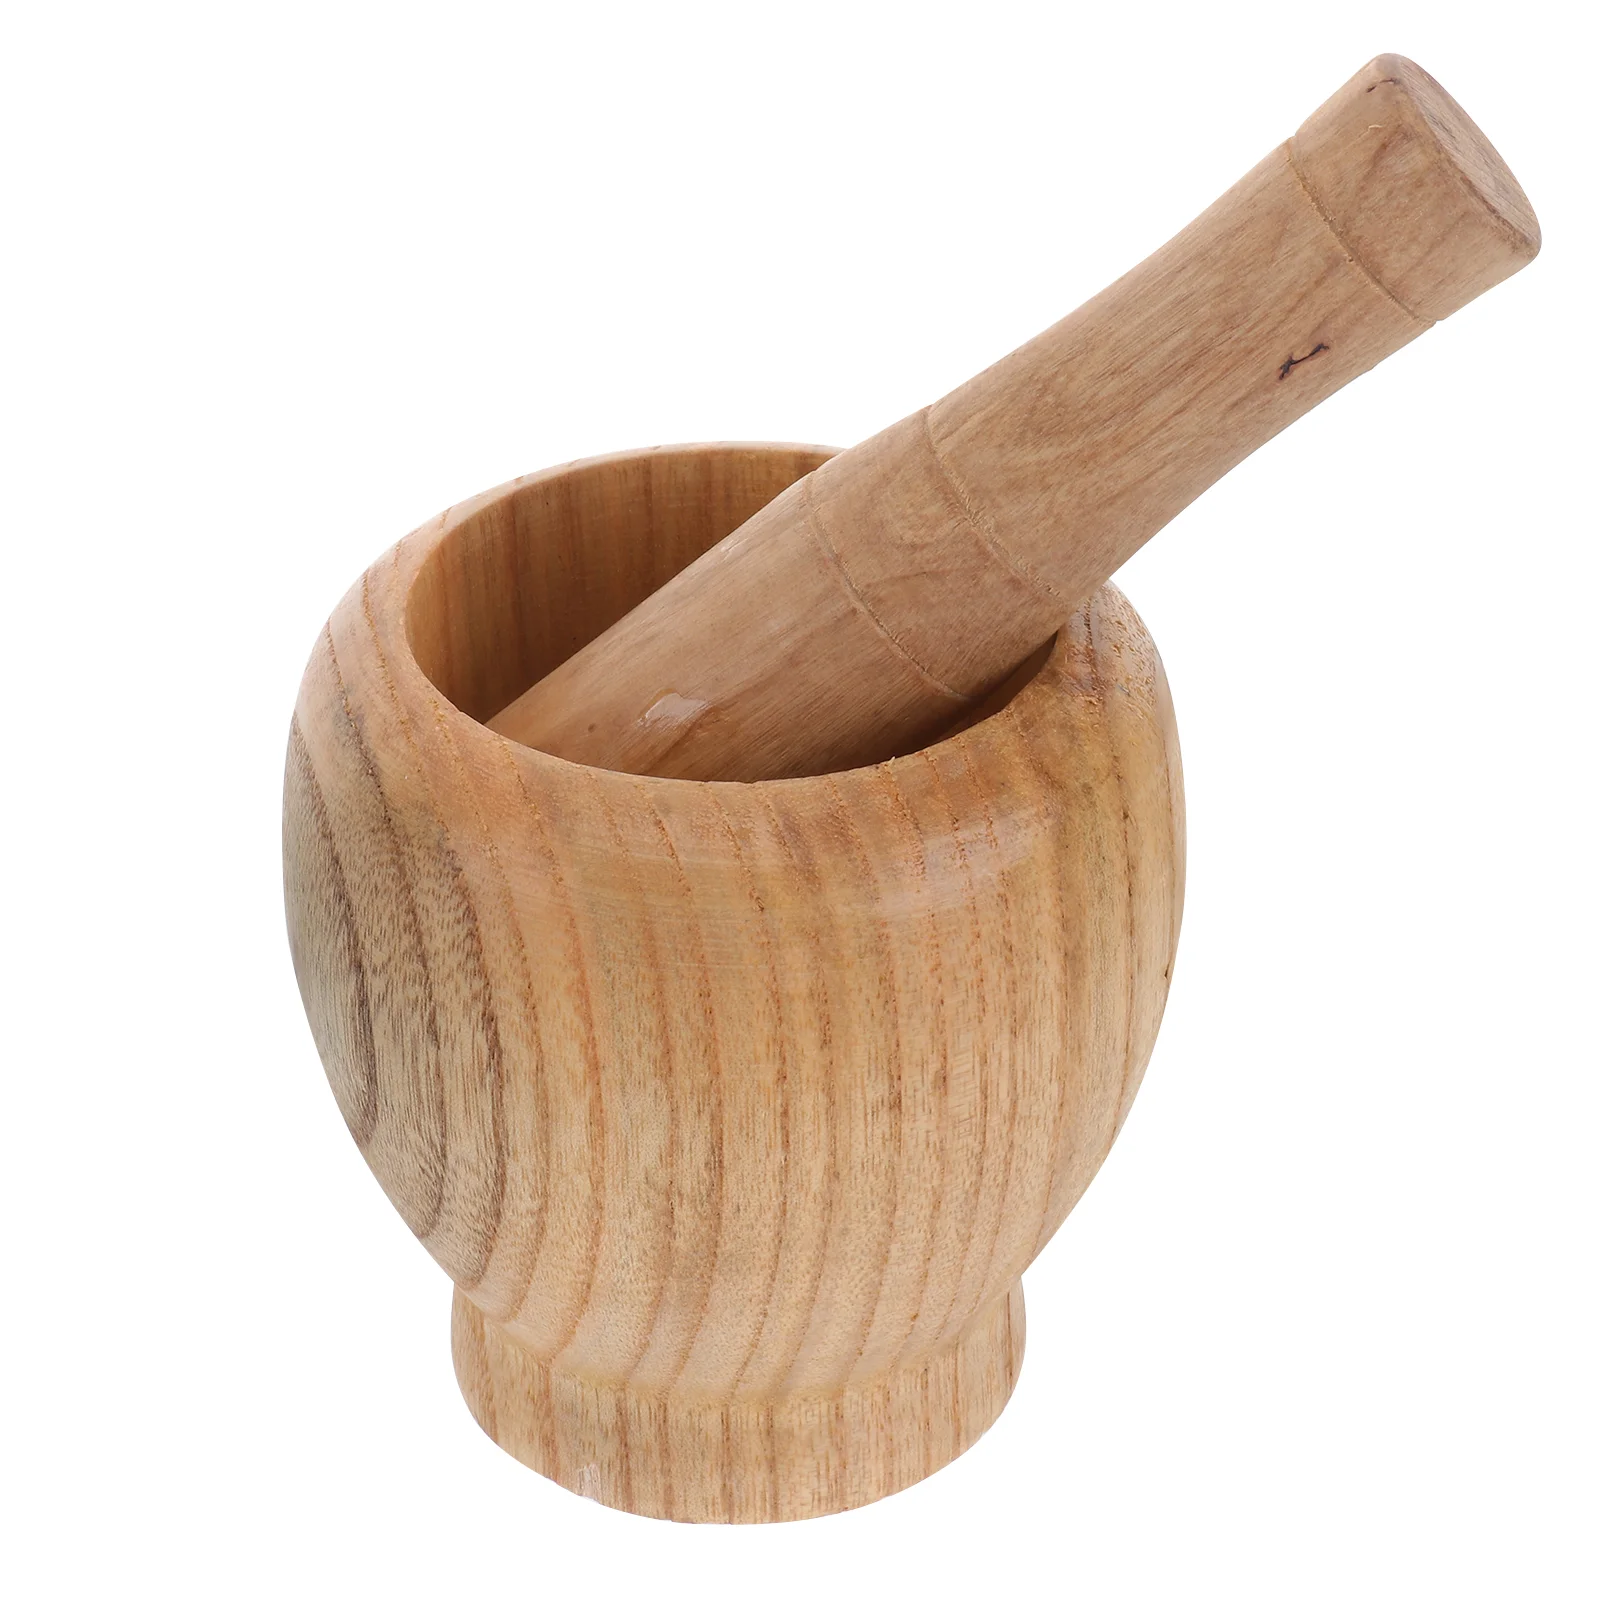 

Manual Grinder Wooden Mortar Pestle Garlic Crusher Smasher Pugging Pot Kitchen Gagets Grinding Bowl Pounder